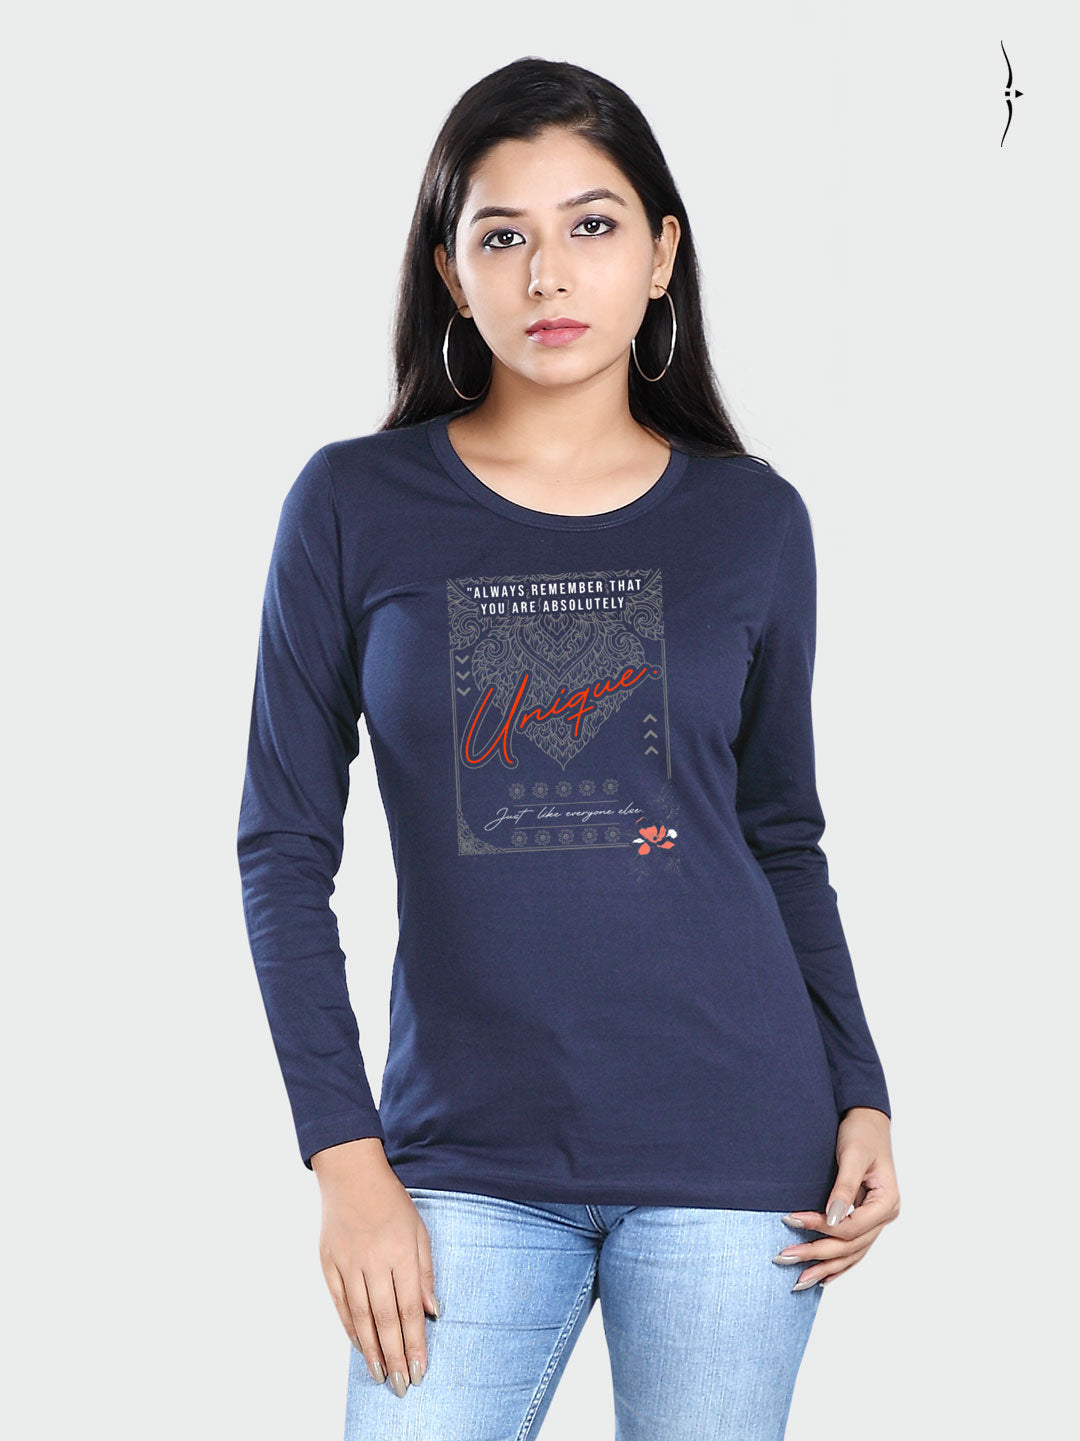 cotton roundneck fullsleeve ladies tshirt navy blue-essa garments